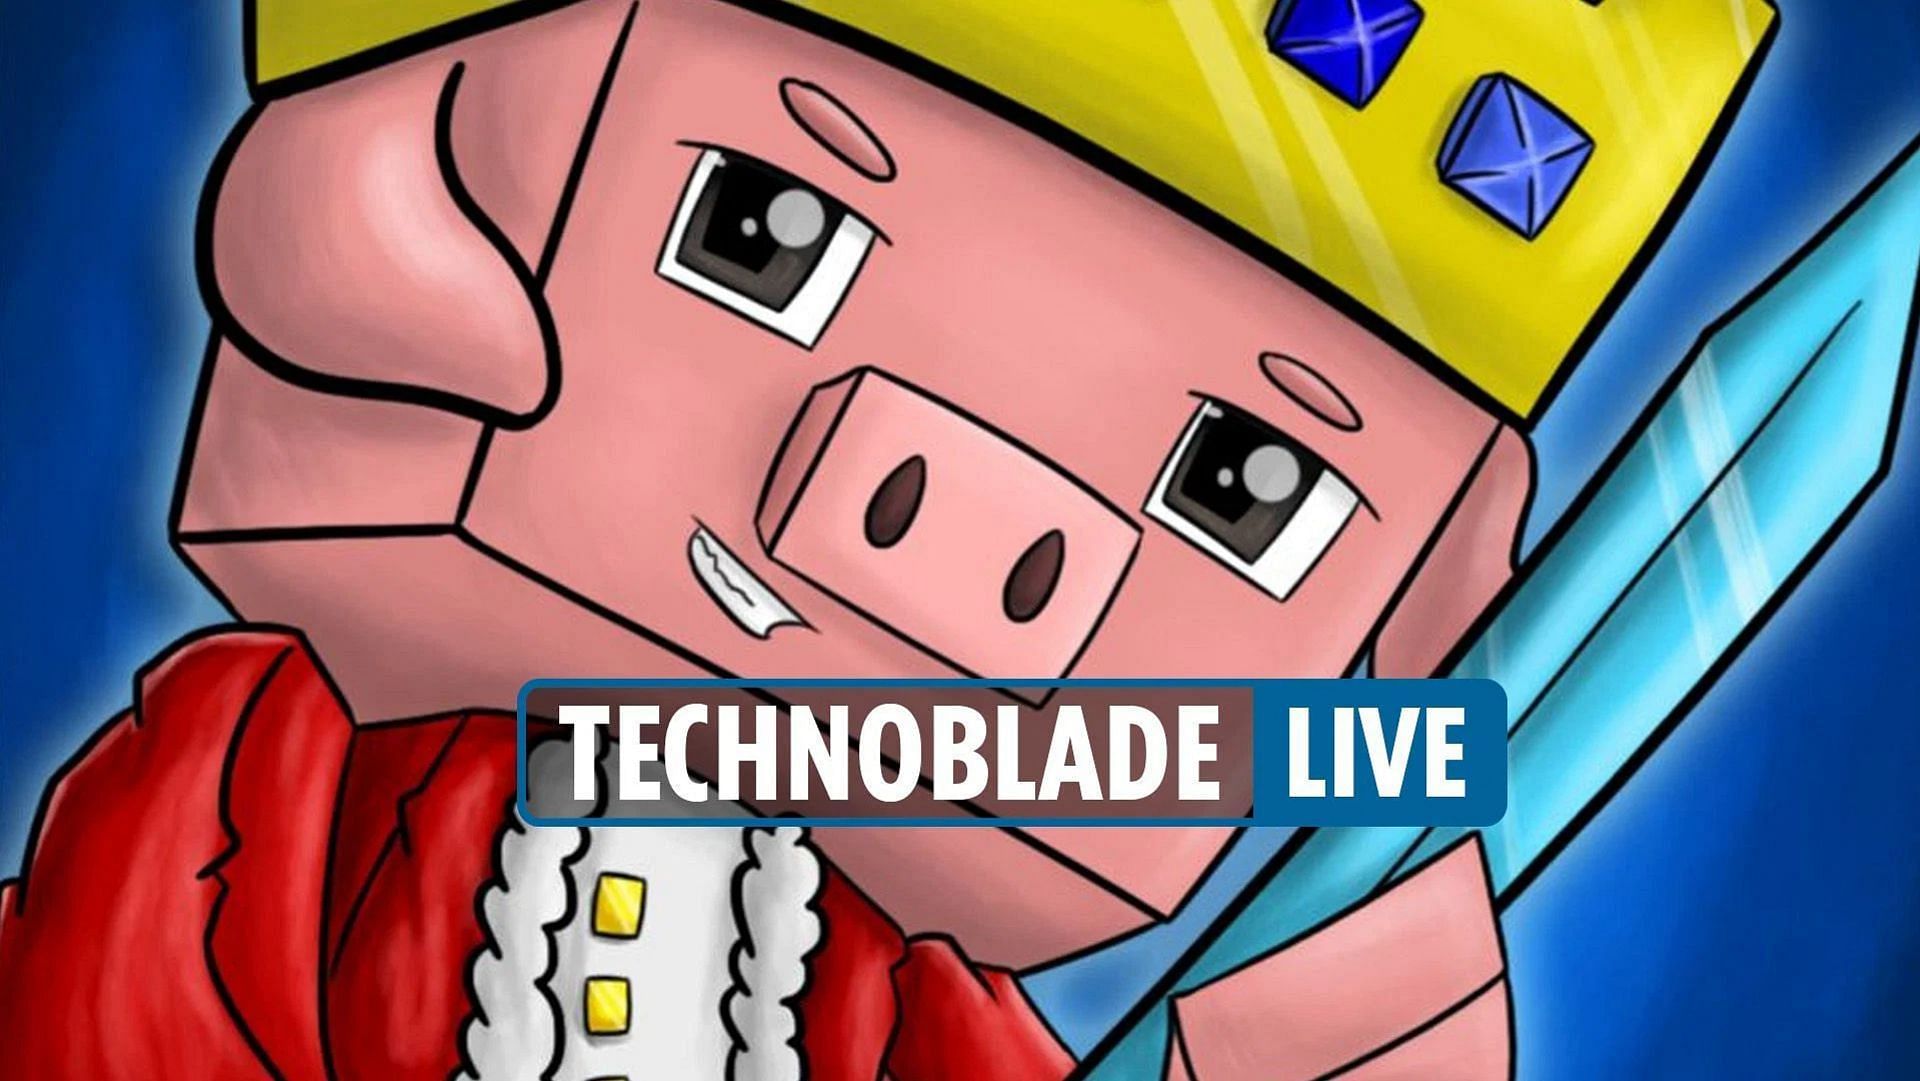 Fun fact: Techno uploaded his 1st Minecraft video on Studiolore